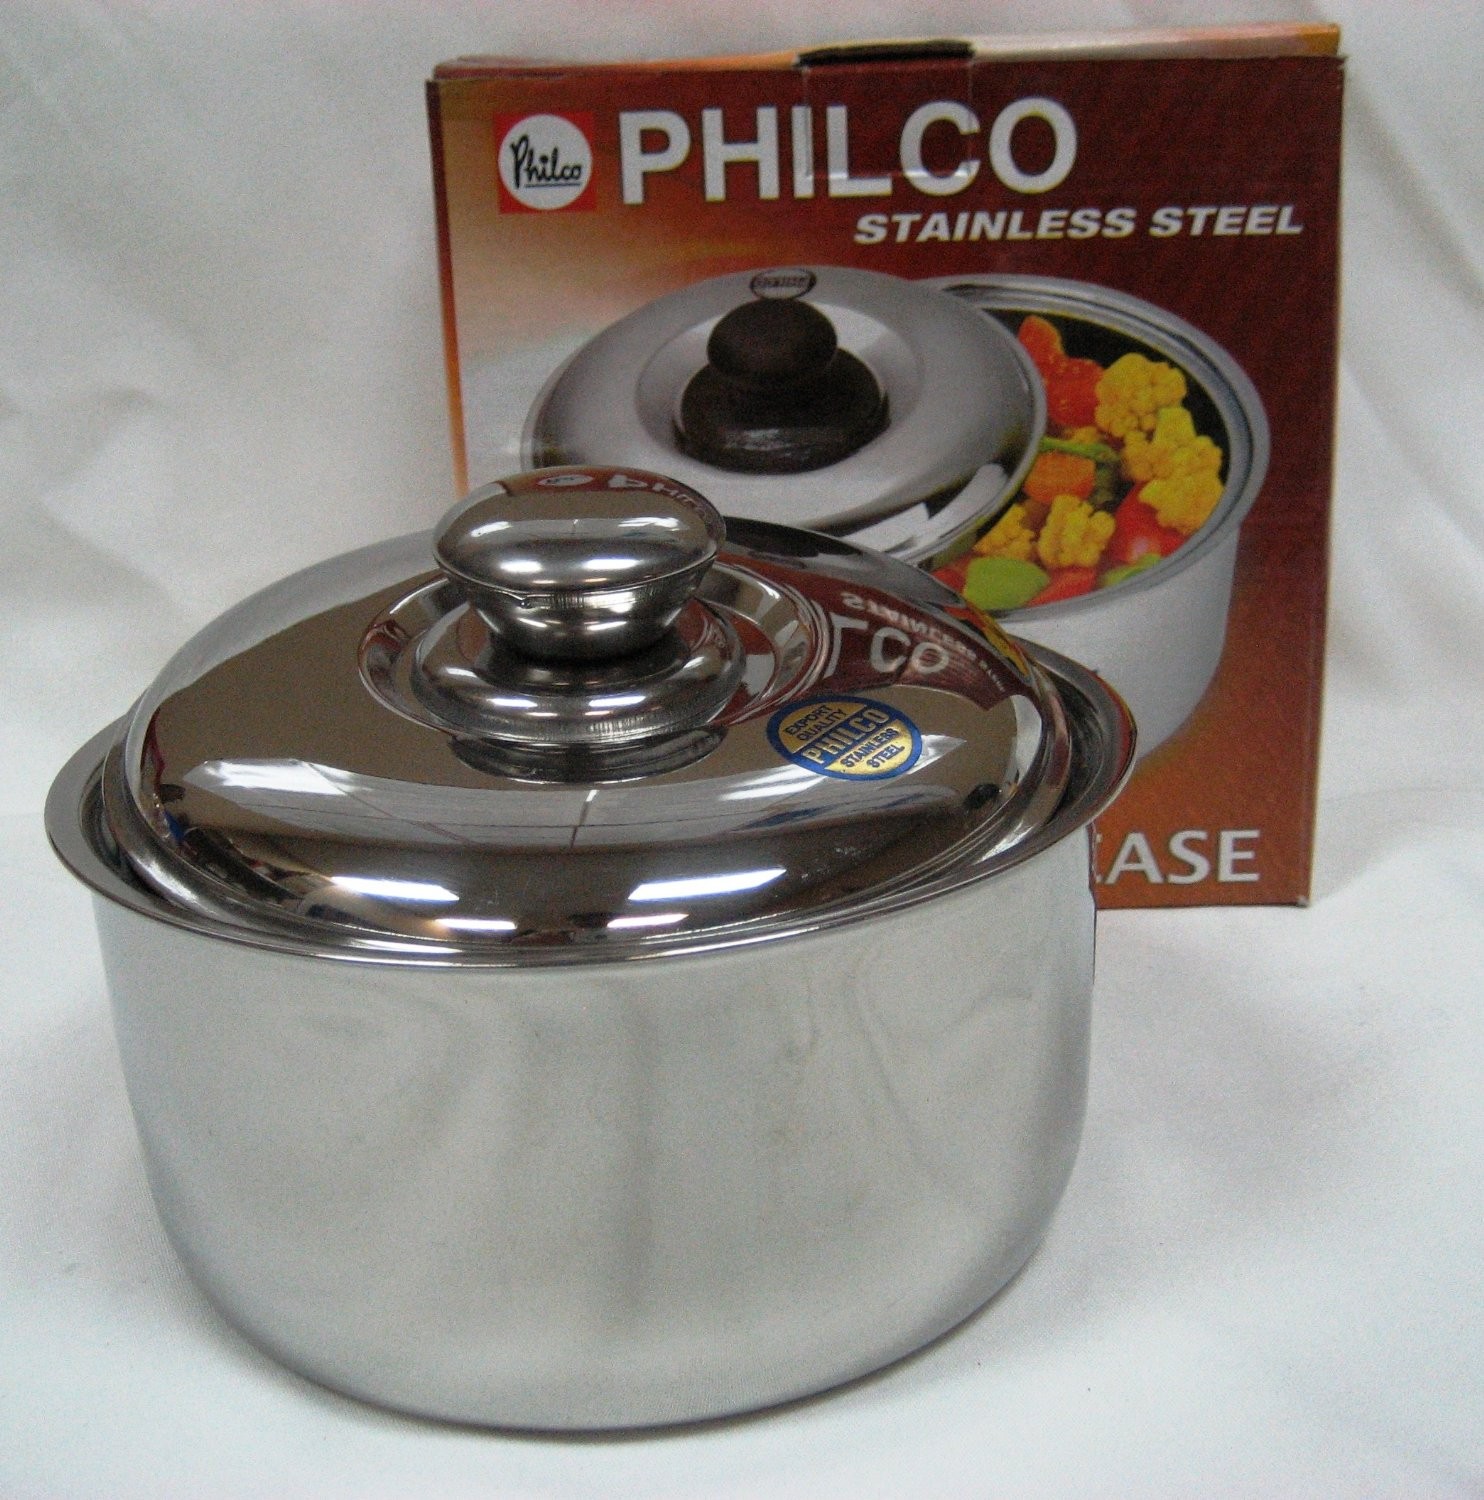 Philco Stainless Steel Hot Casserole 850